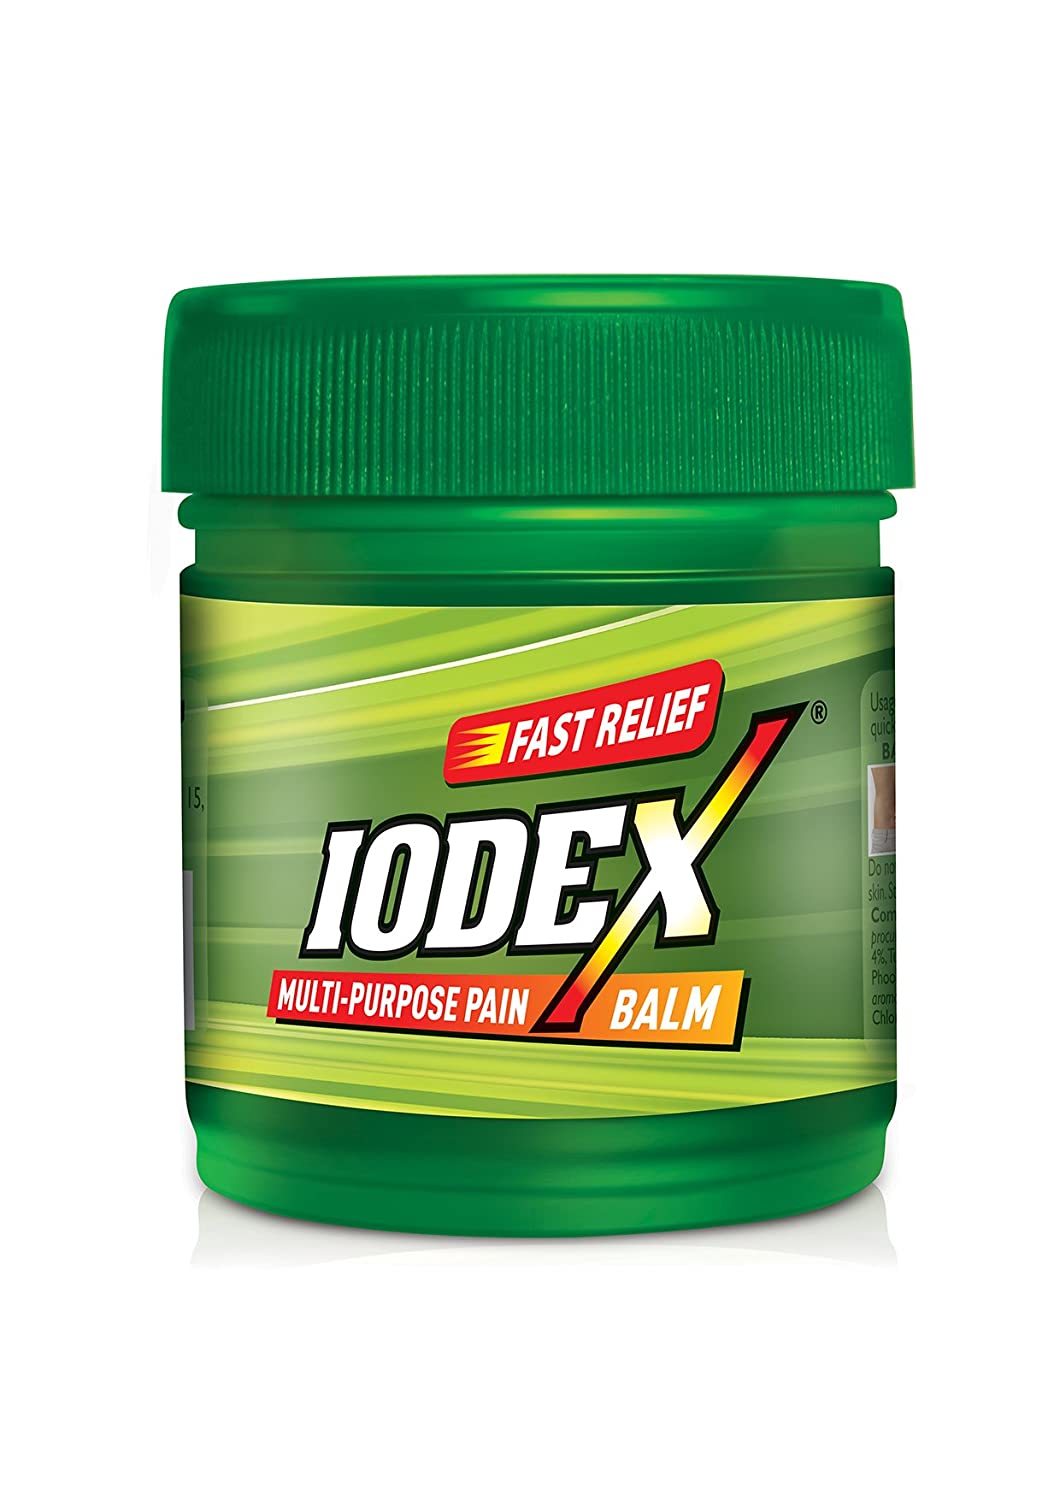 Iodex Multi-Purpose Pain Relief Balm : 40 gms